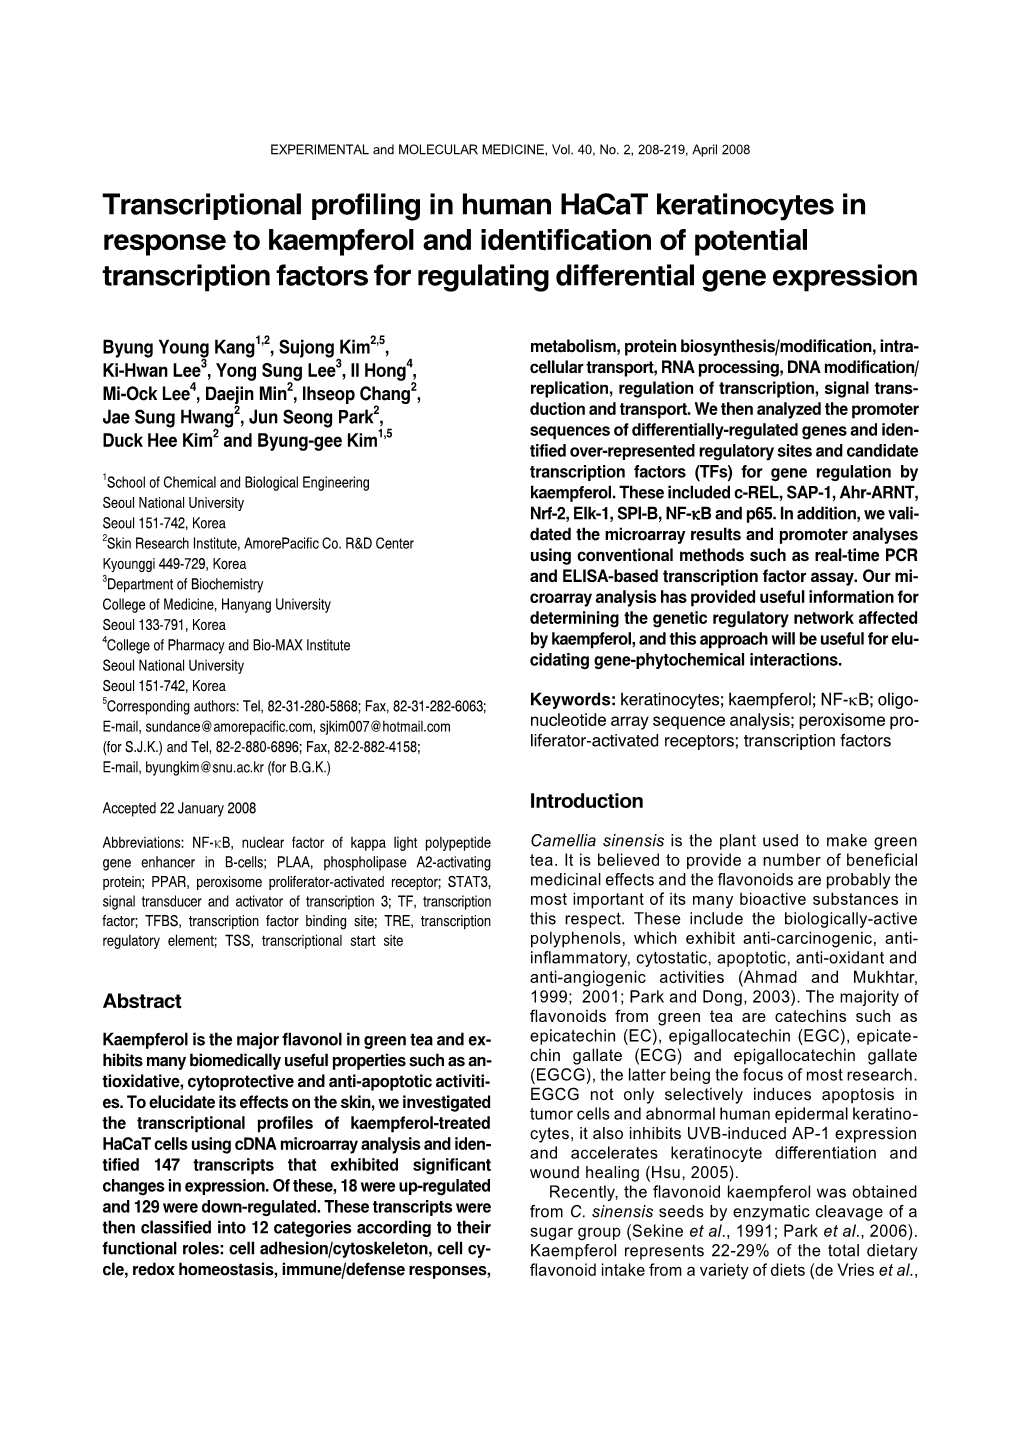 Transcriptional Profiling in Human Hacat Keratinocytes in Response To